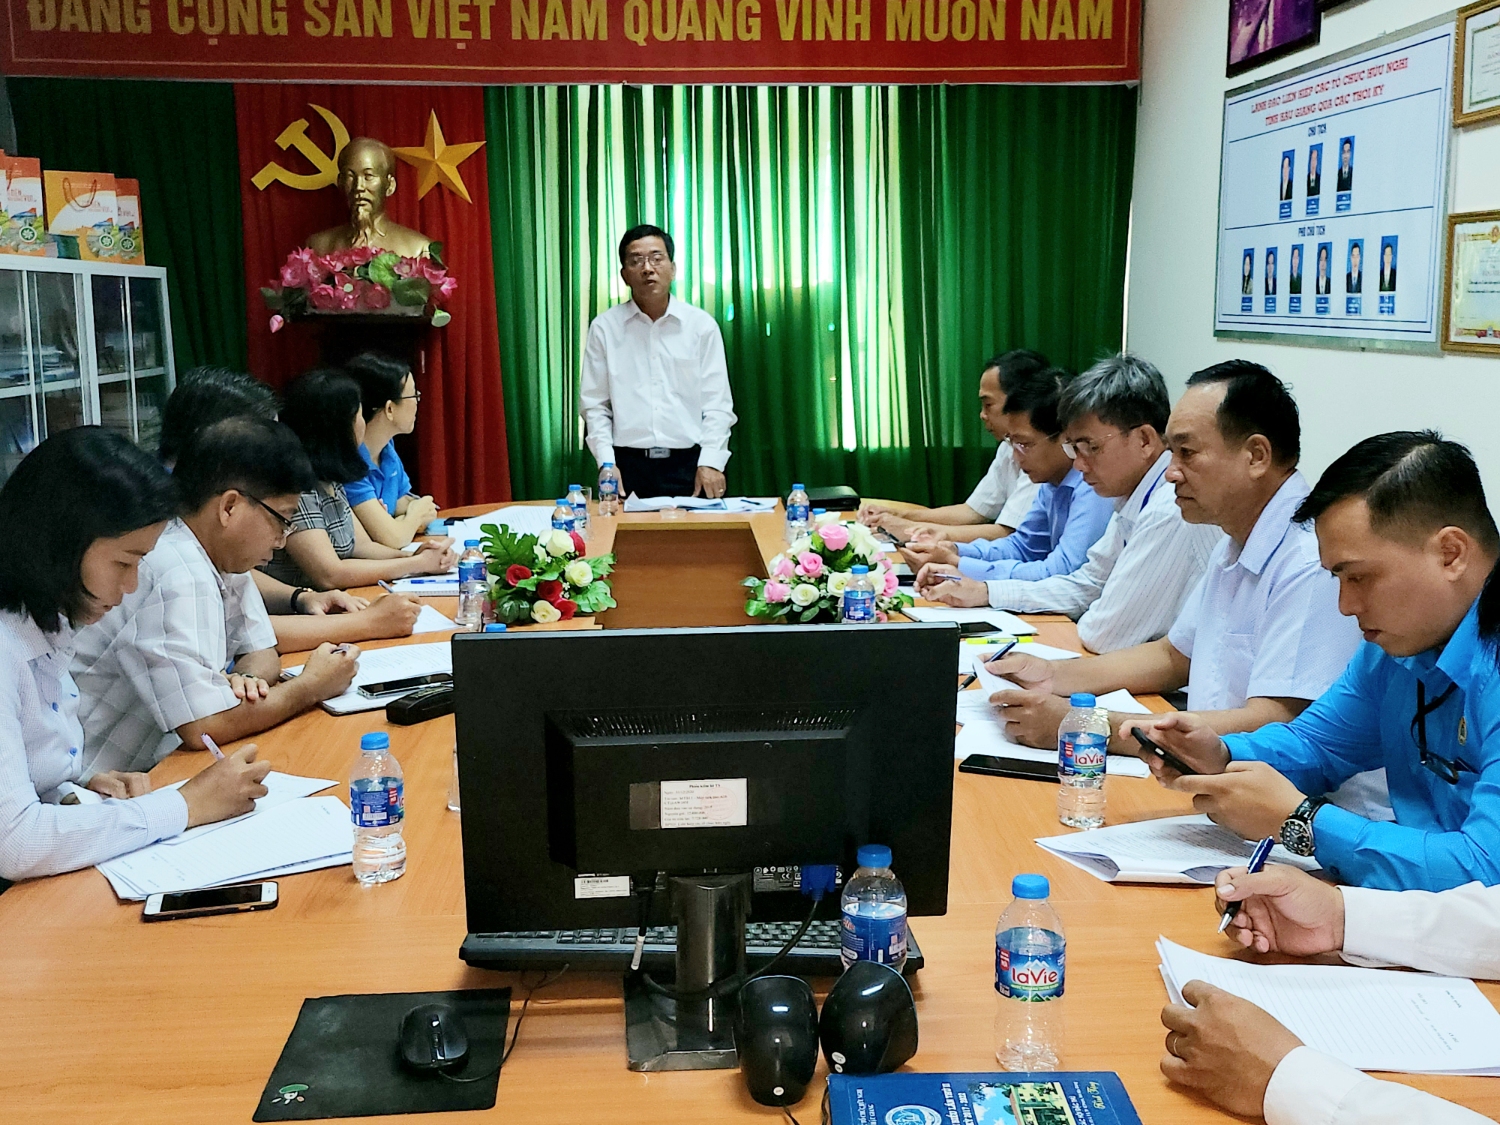 Mr. Nguyen Van Nhan - Chairman of the Hau Giang Union of Friendship Organizations speaking at the working.